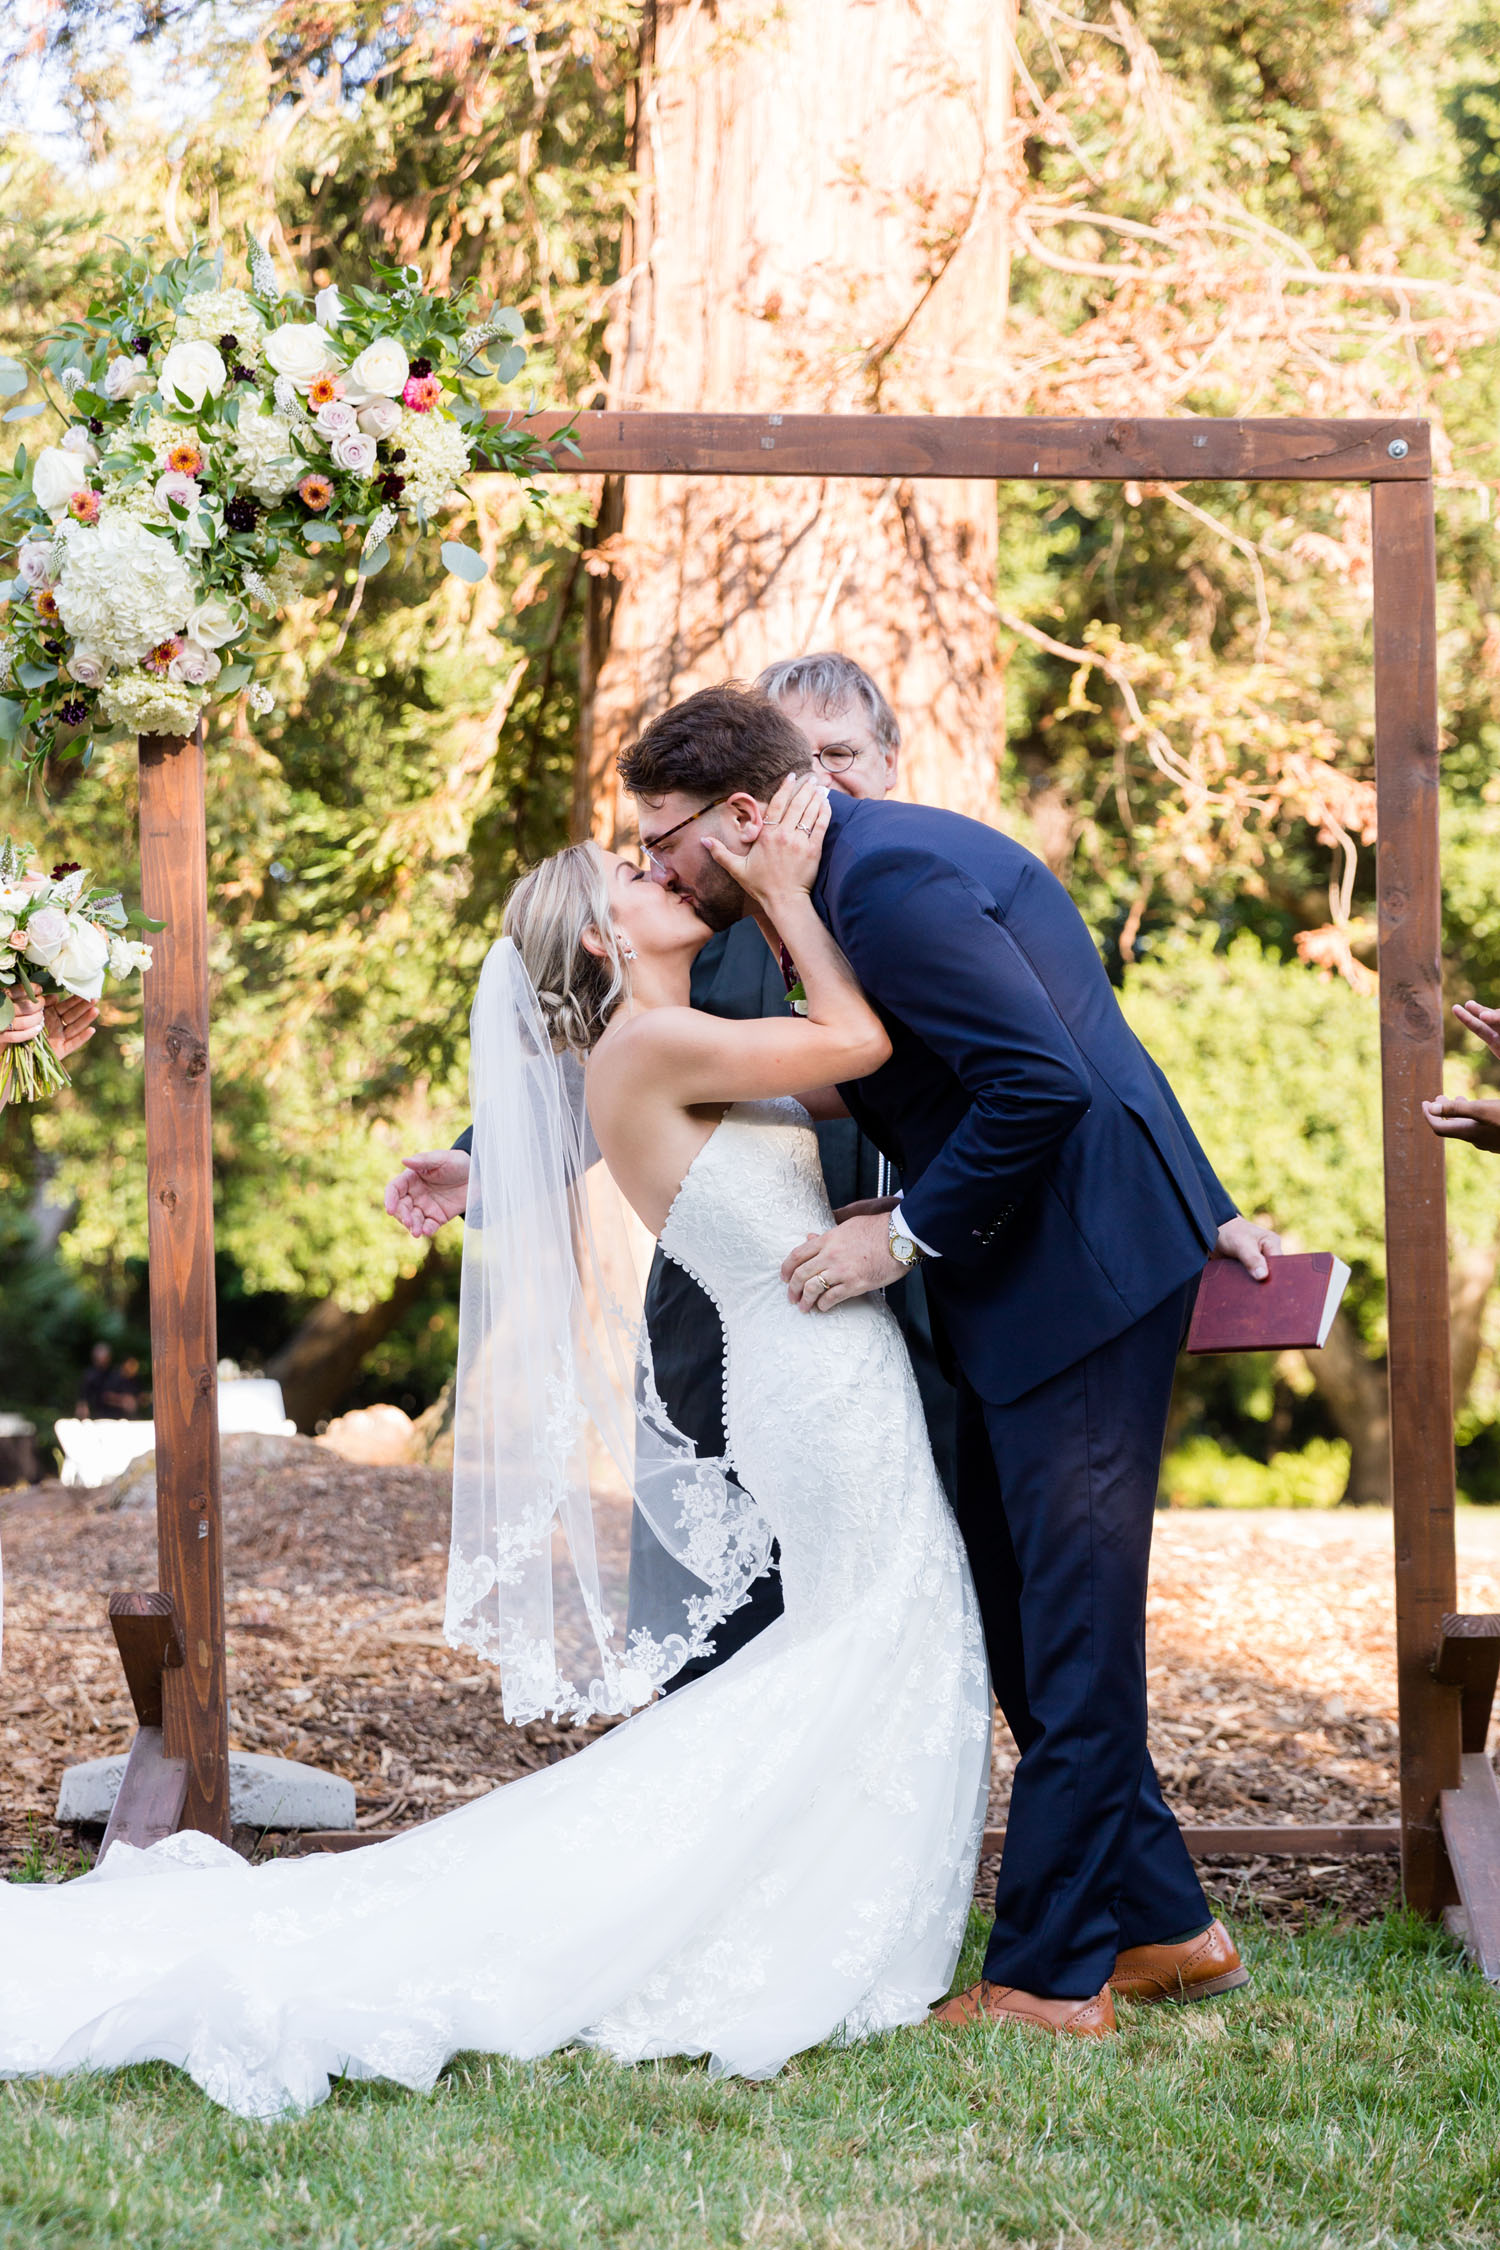 Jennifer and Aaron kissing at Ardenwood wedding ceremony